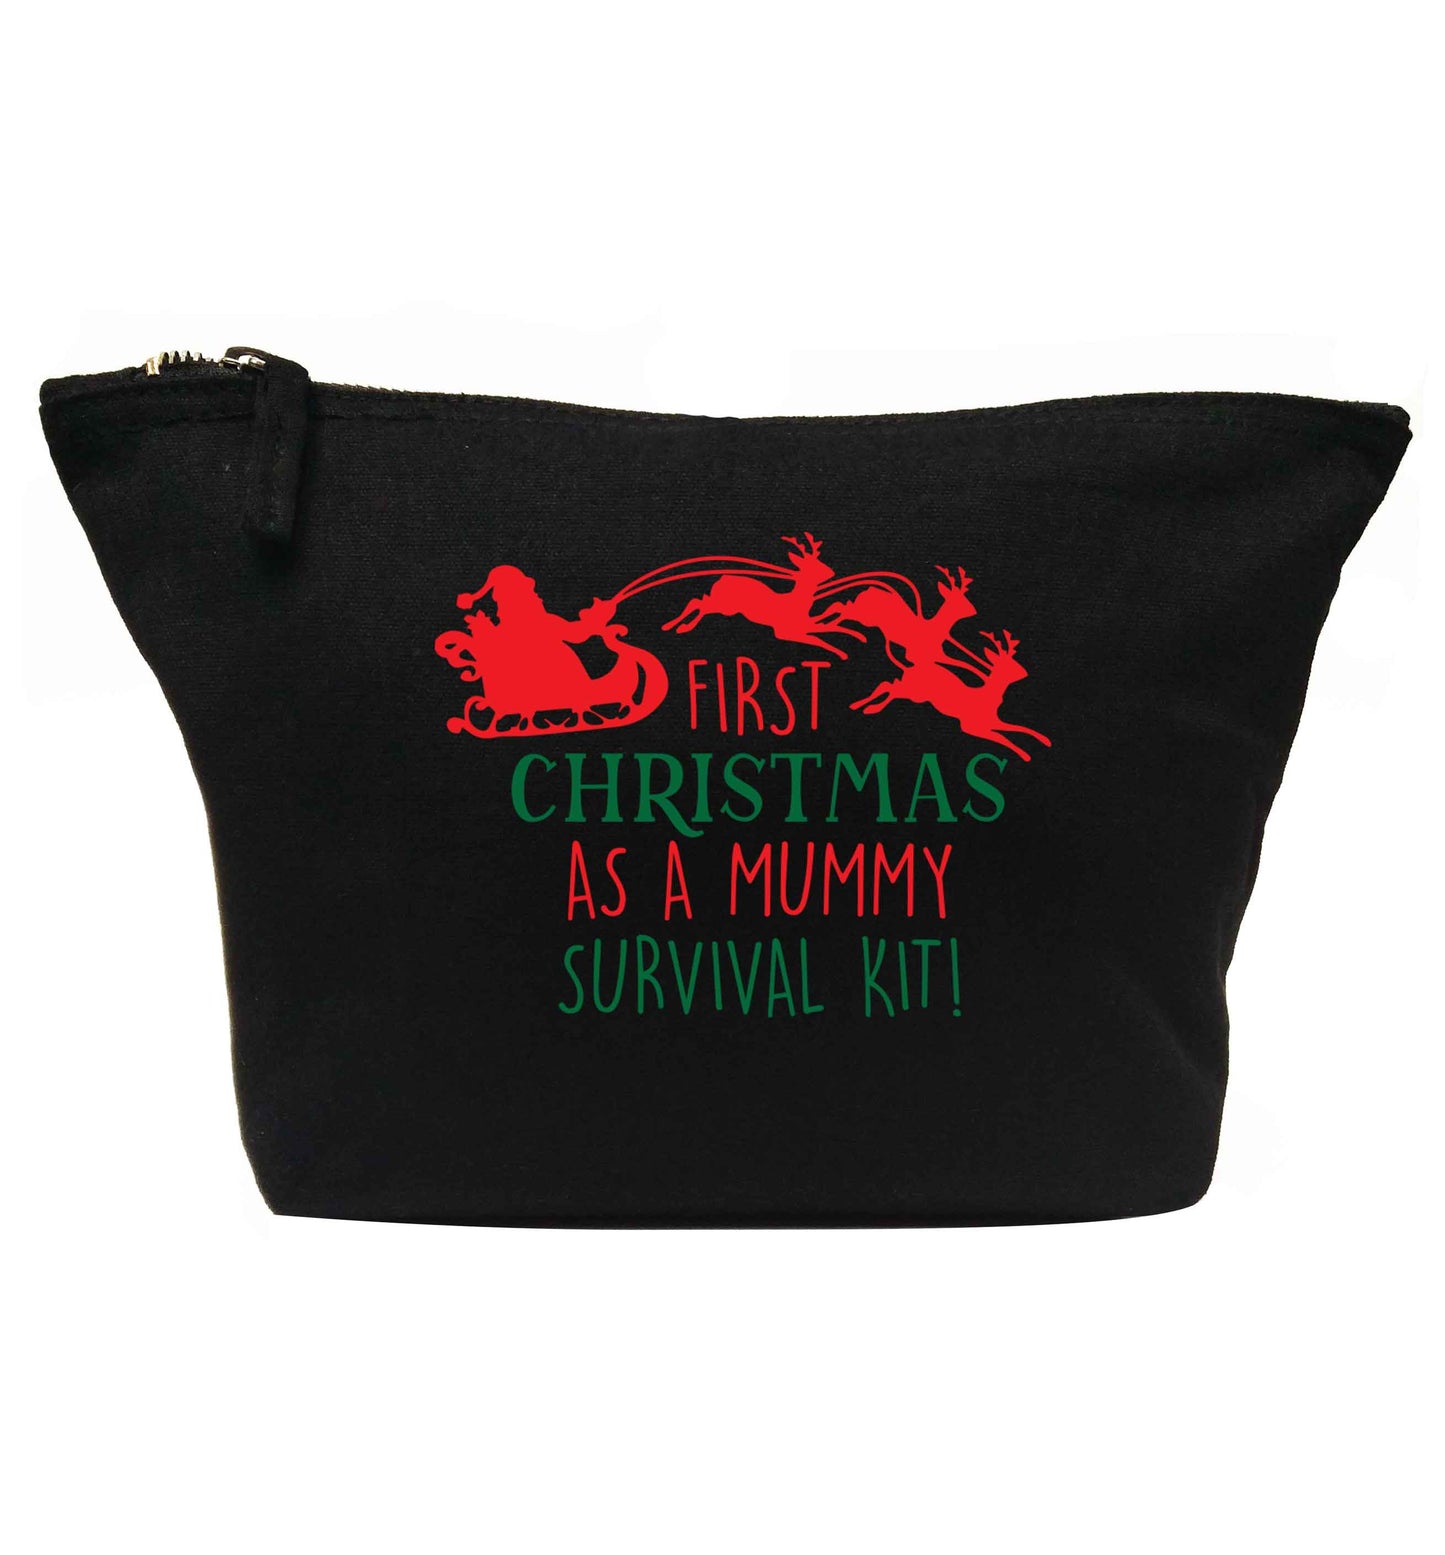 First Christmas as a mummy survival kit | makeup / wash bag